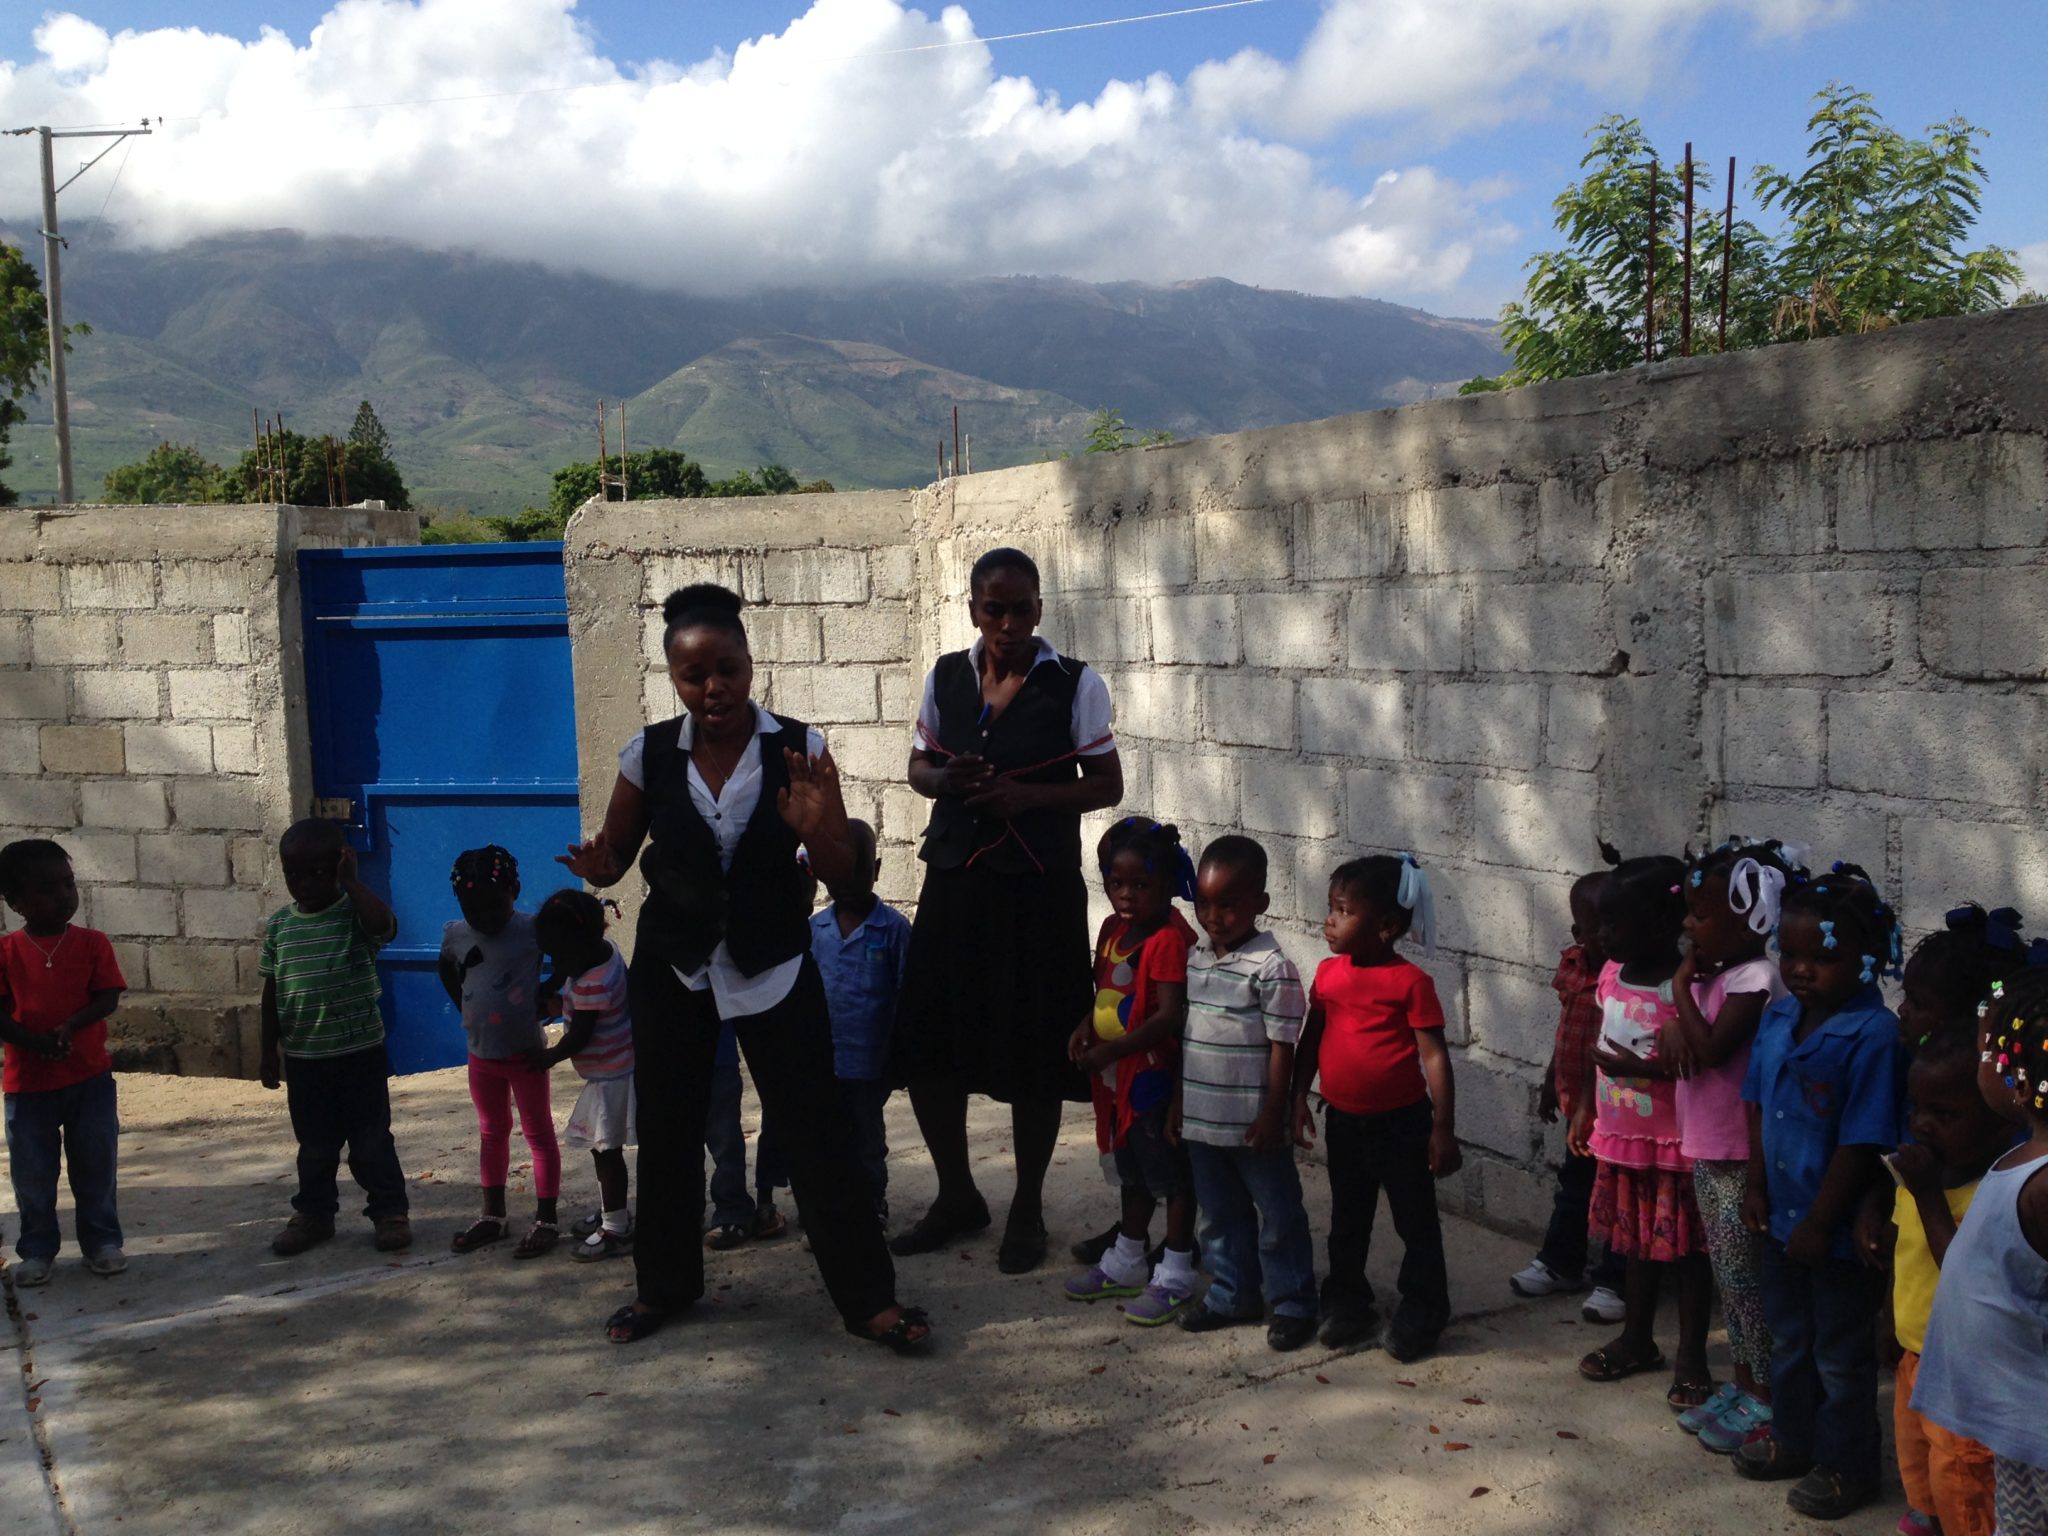 service trip to Haiti, my experience in Haiti, life in Haiti